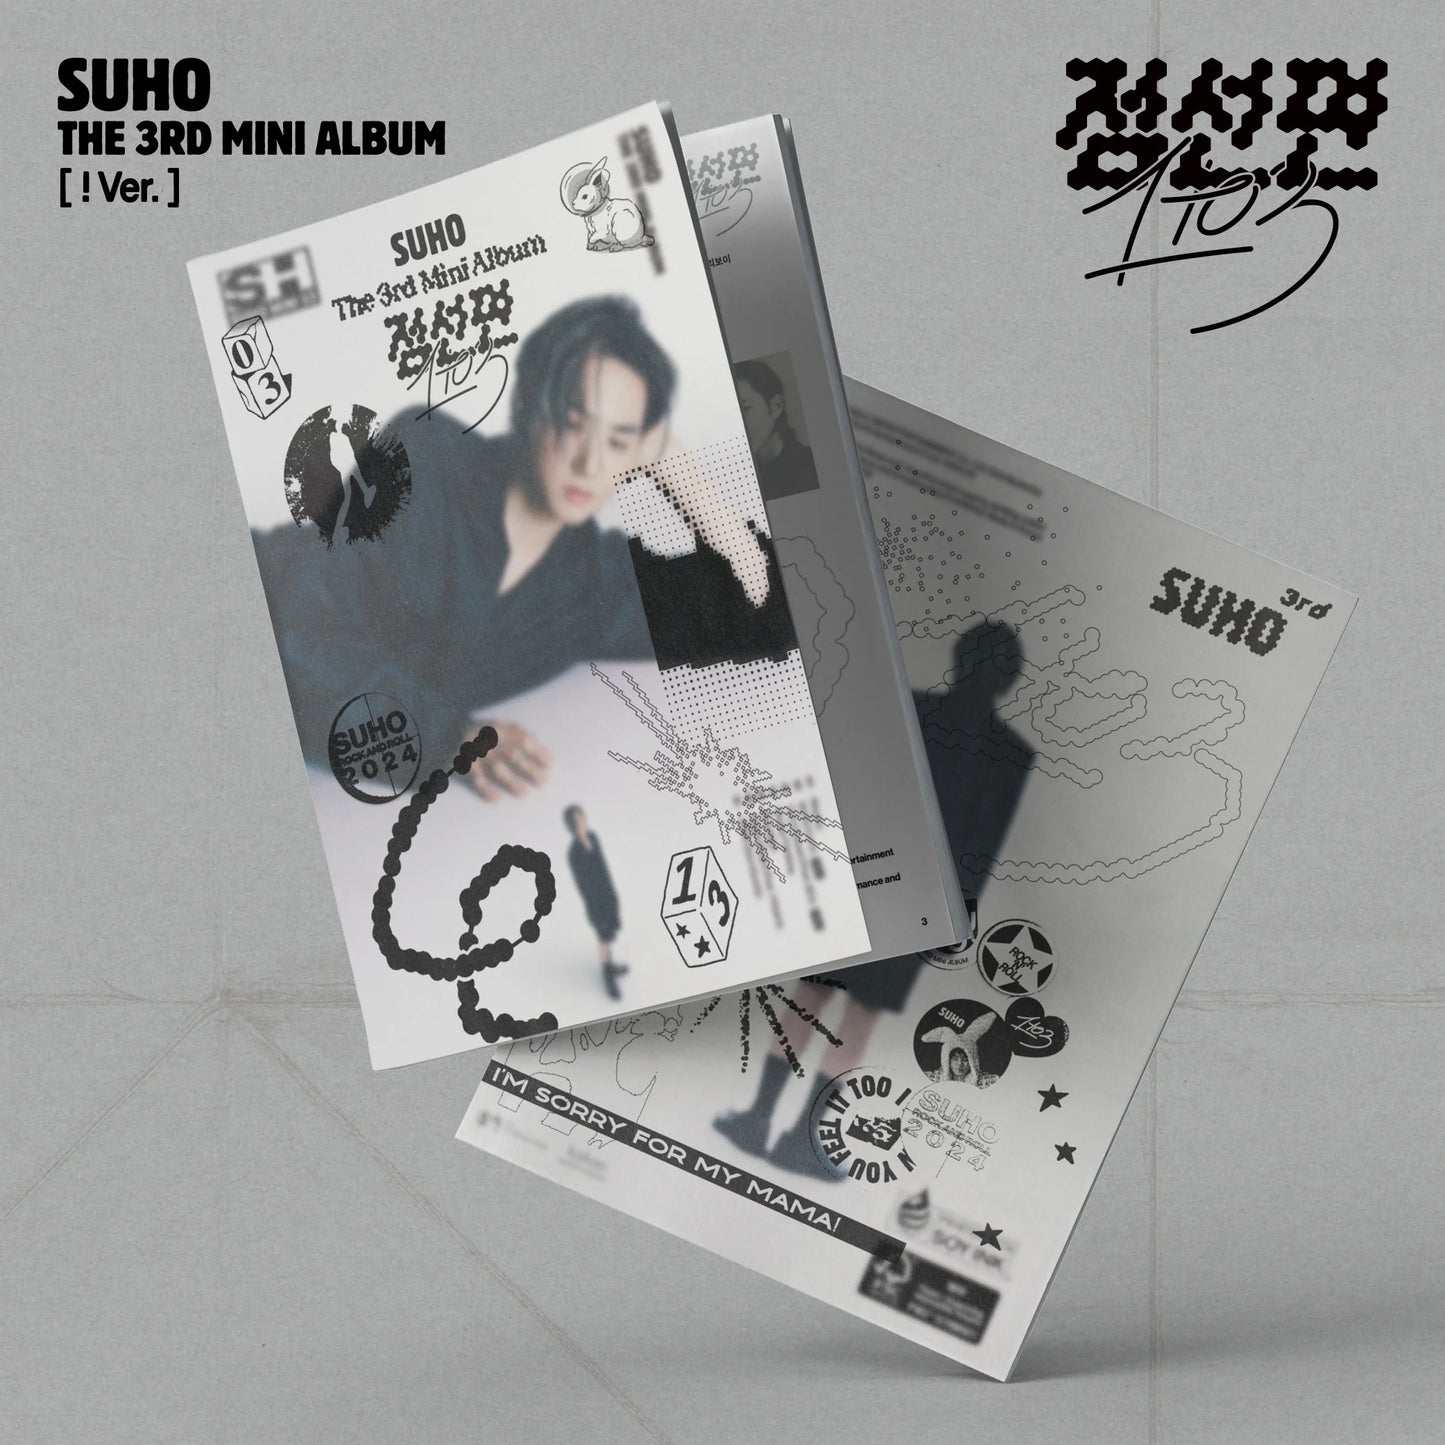 Suho 3rd Mini Album 점선면 (1 to 3)] (! Ver.)